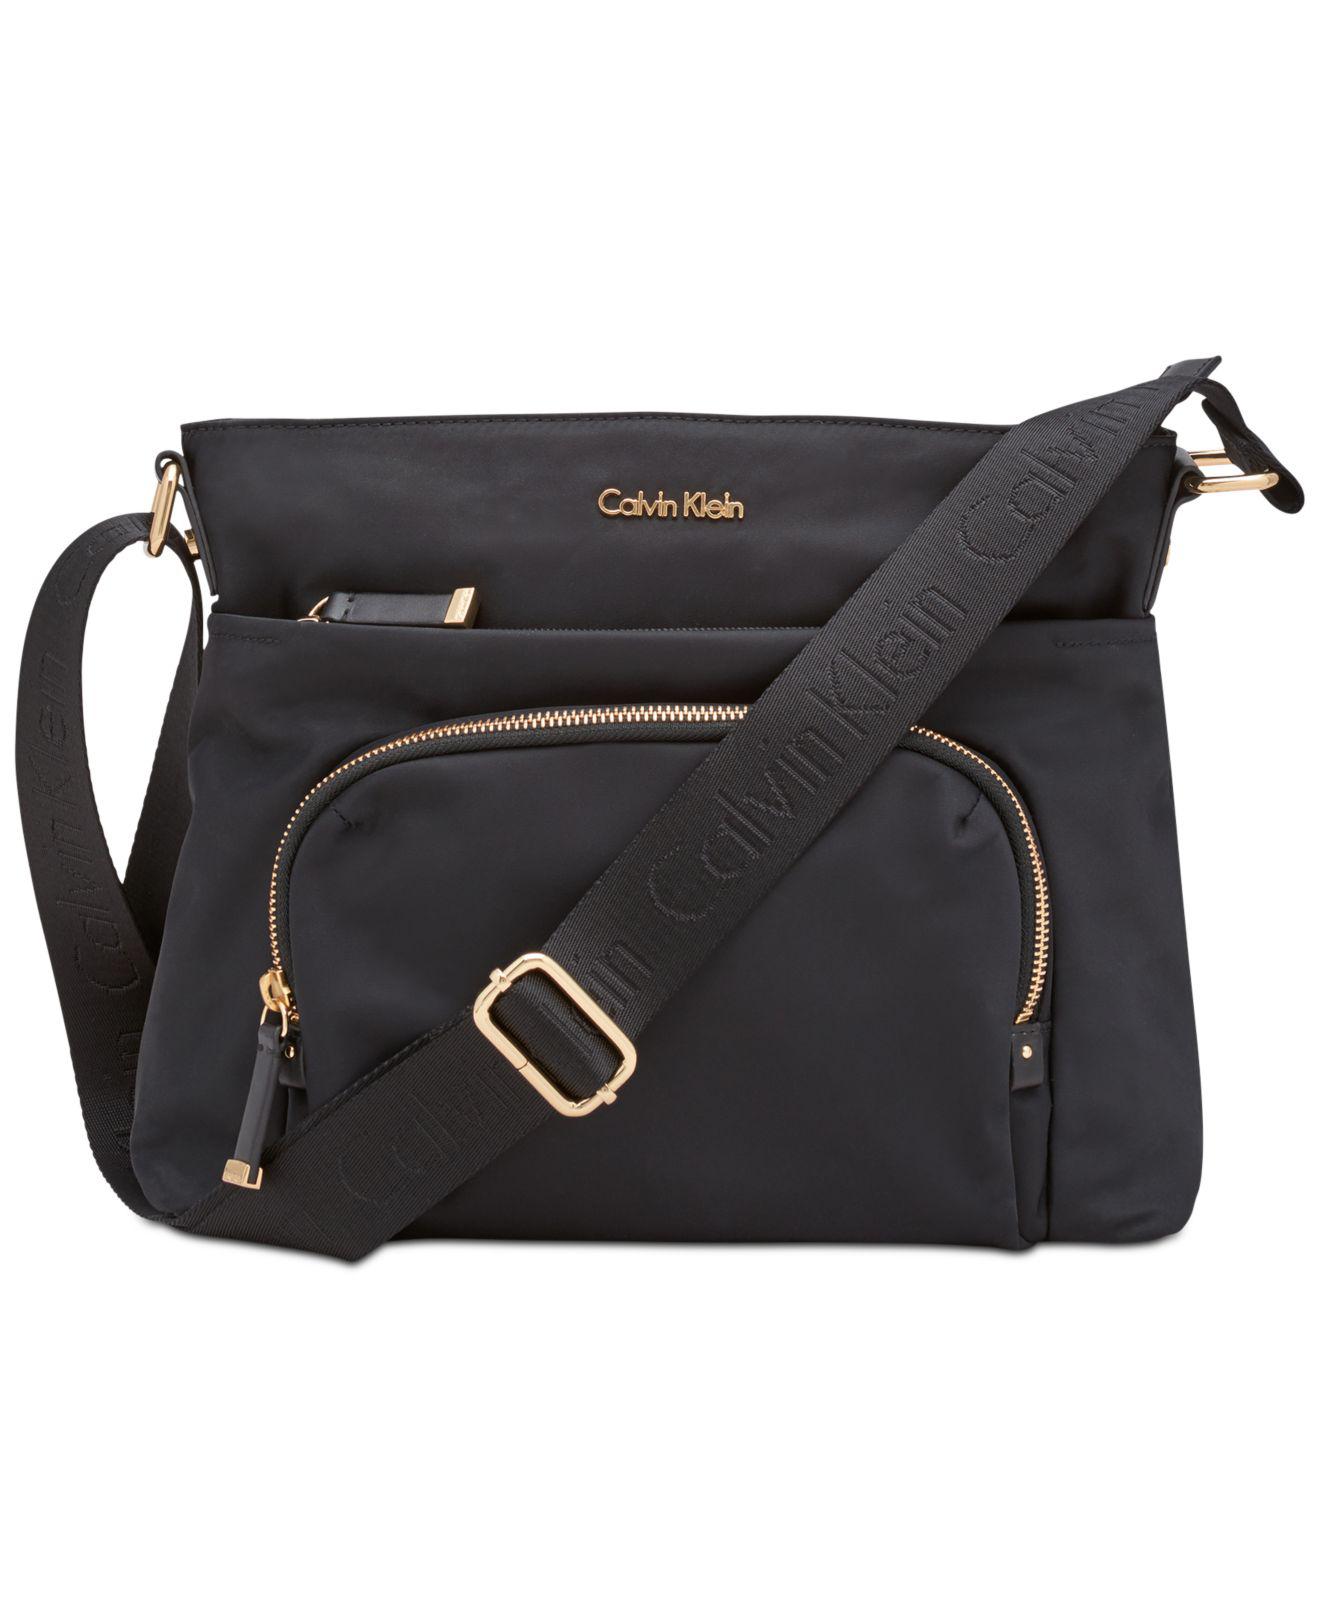 Image result for calvin klein vanessa small crossbody handbag #crossbody #calvinklein #bag